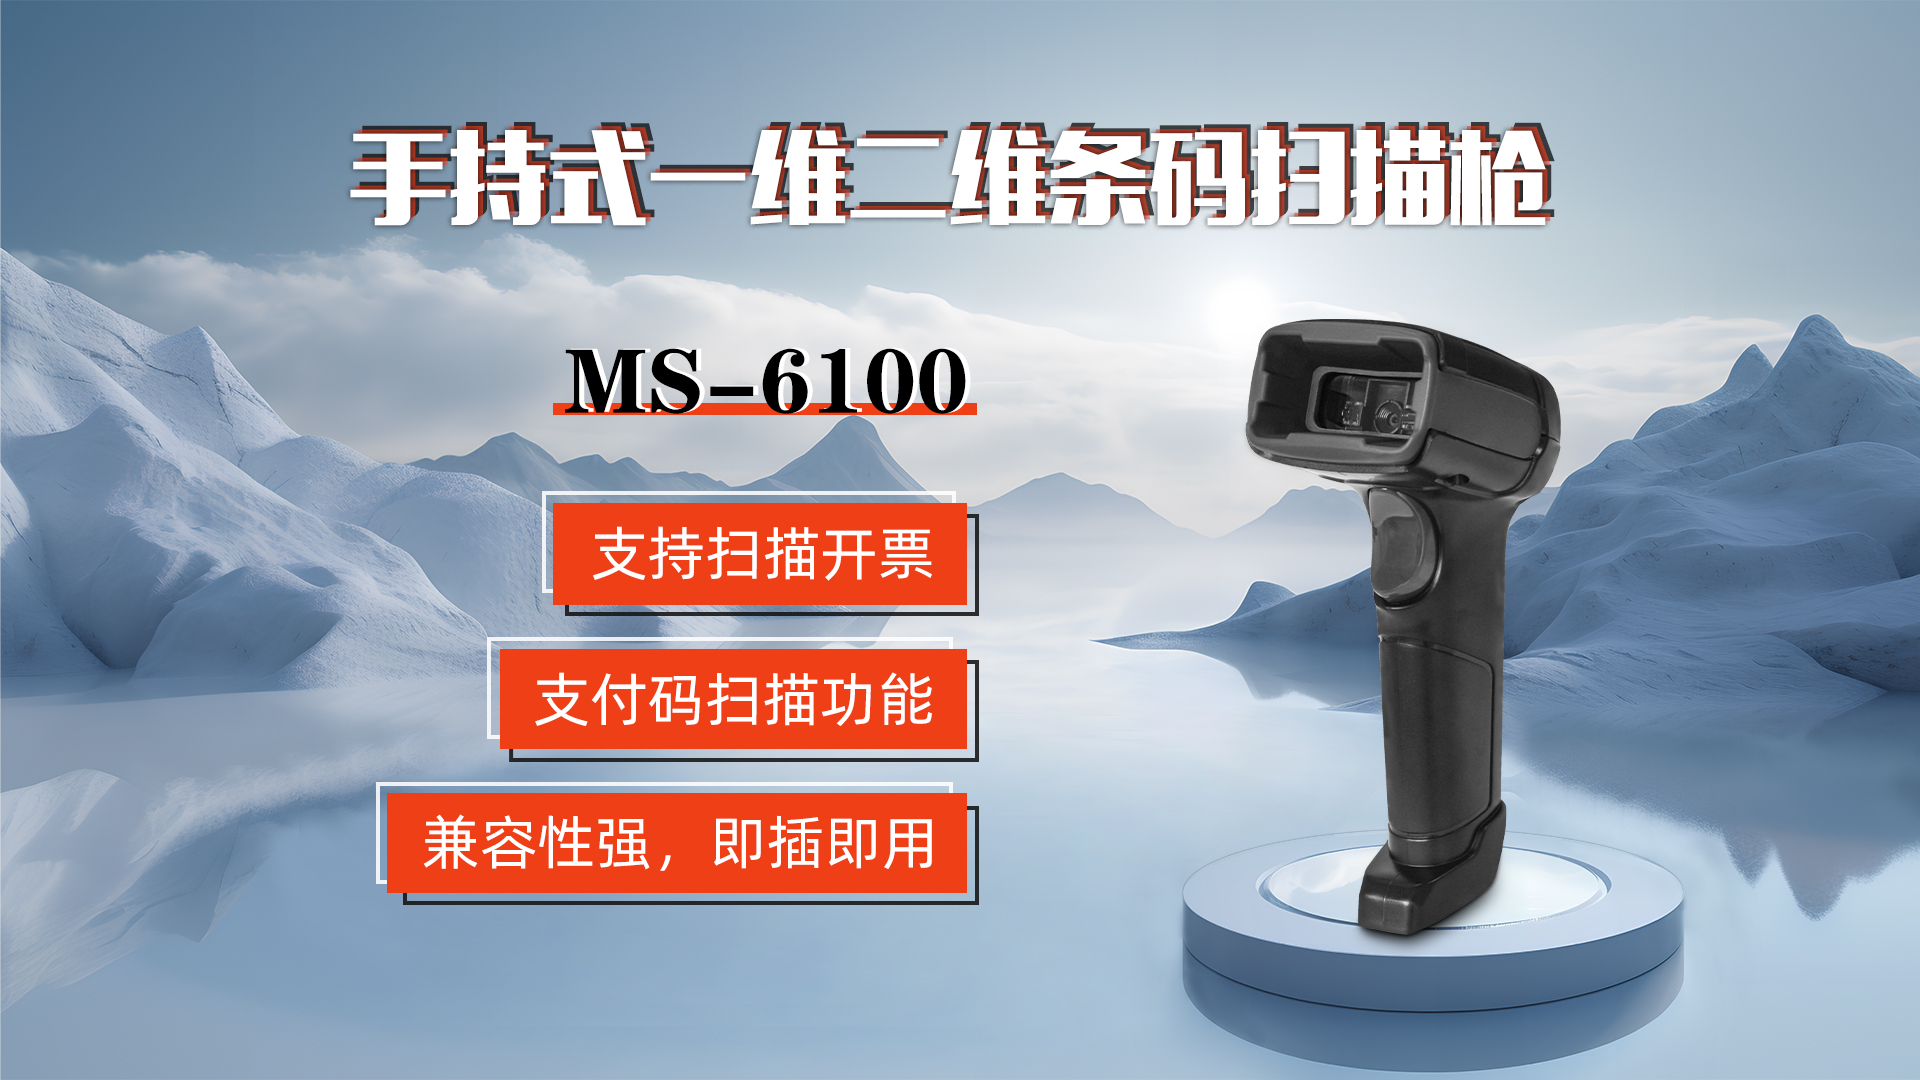 MS-6100的兼容性强，即插即用，可直接扫描手机支付码